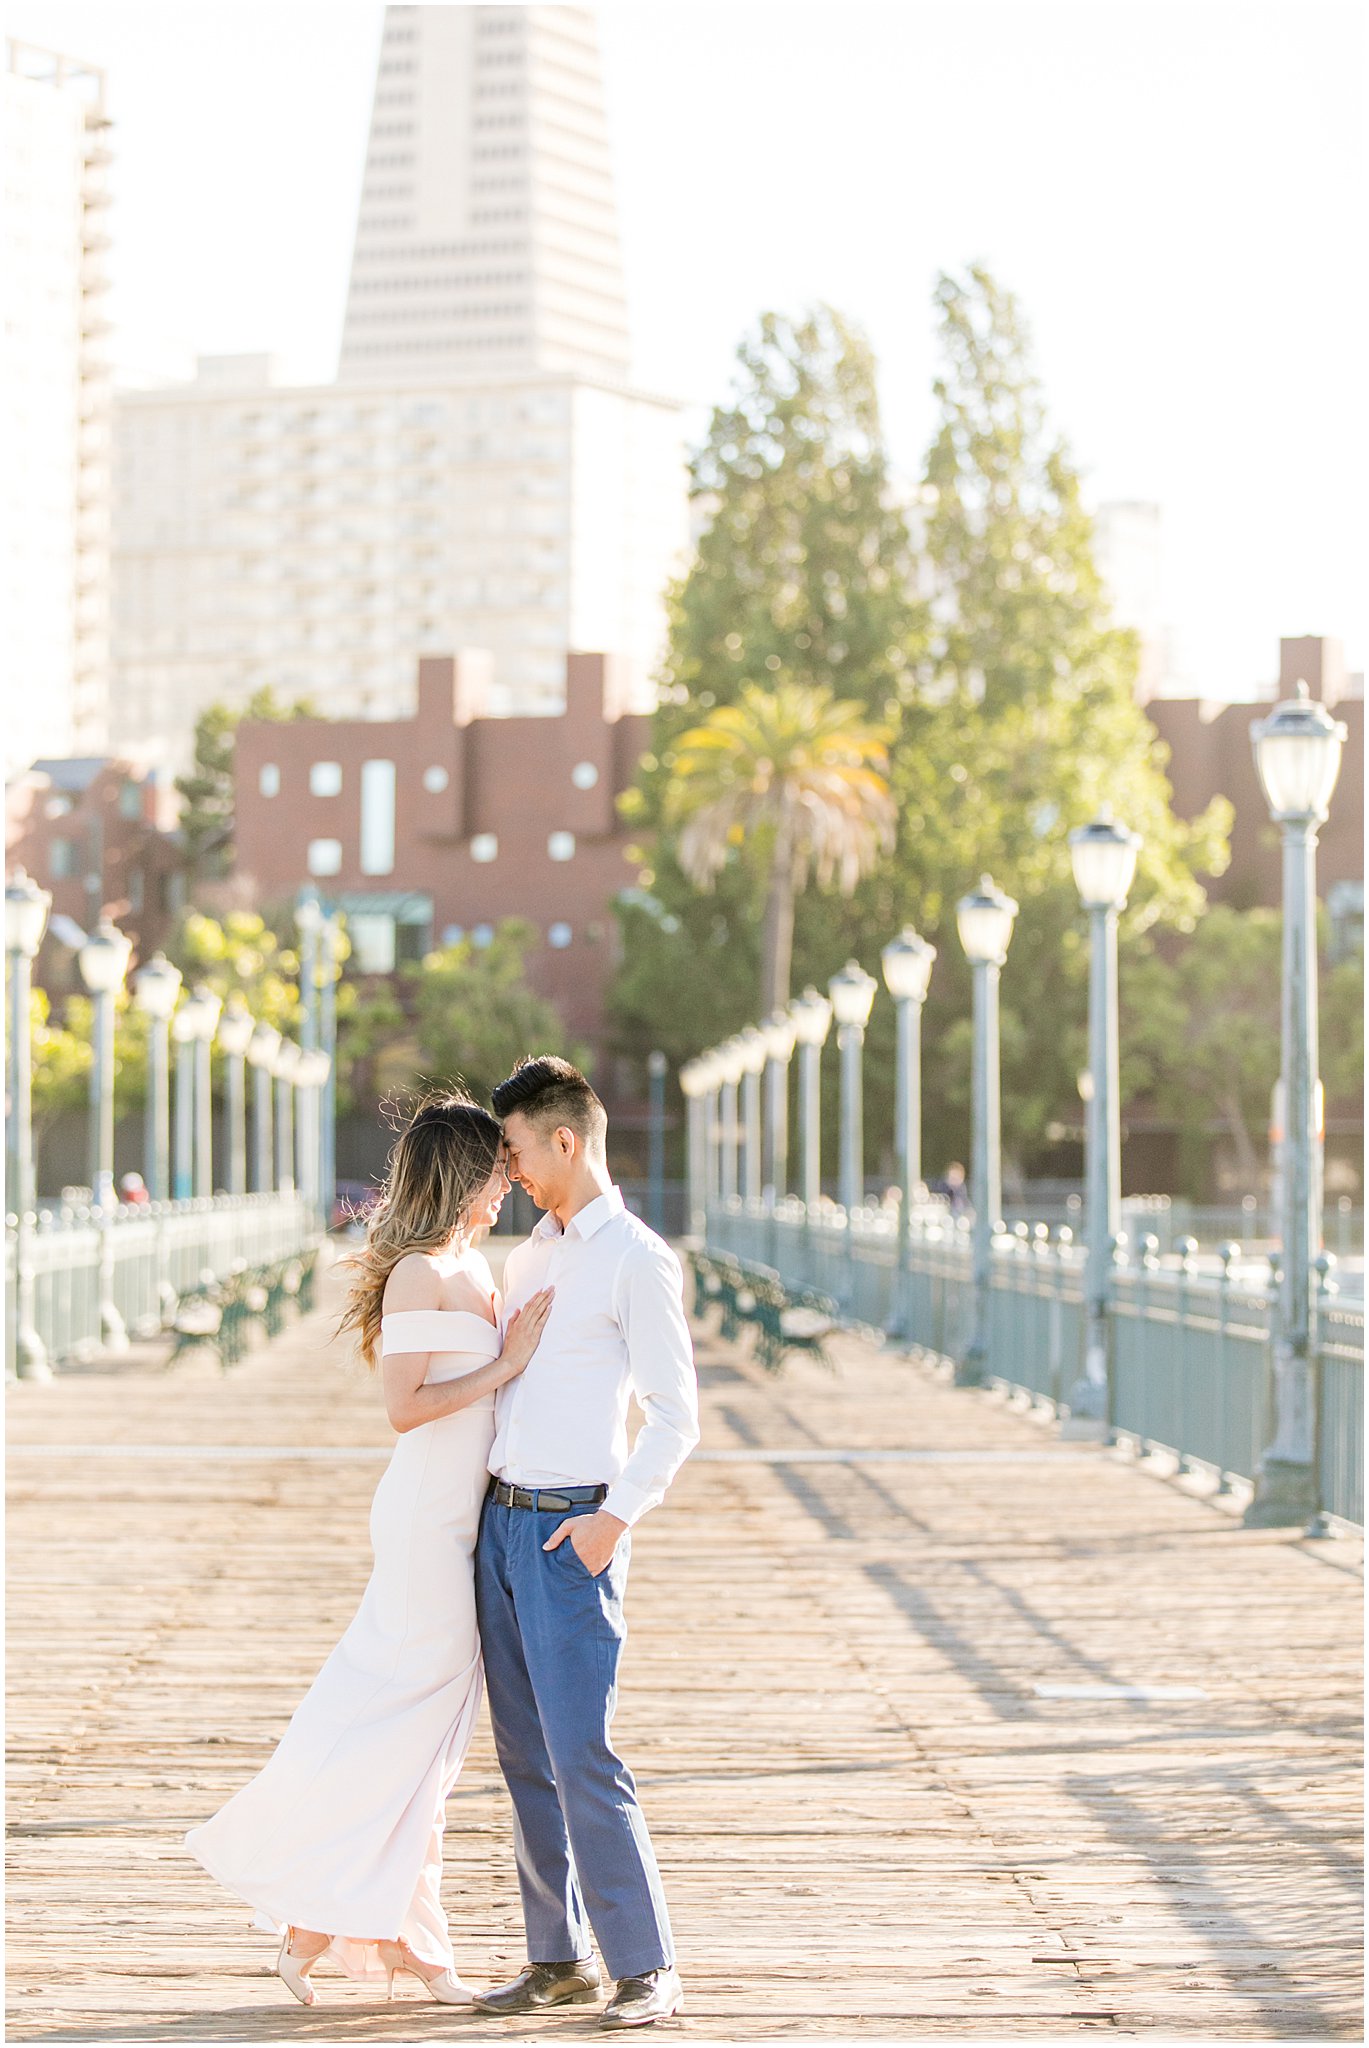 San Francisco Engagement Photos - Bay Area Wedding Photographer - Angela Sue Photography_0005.jpg